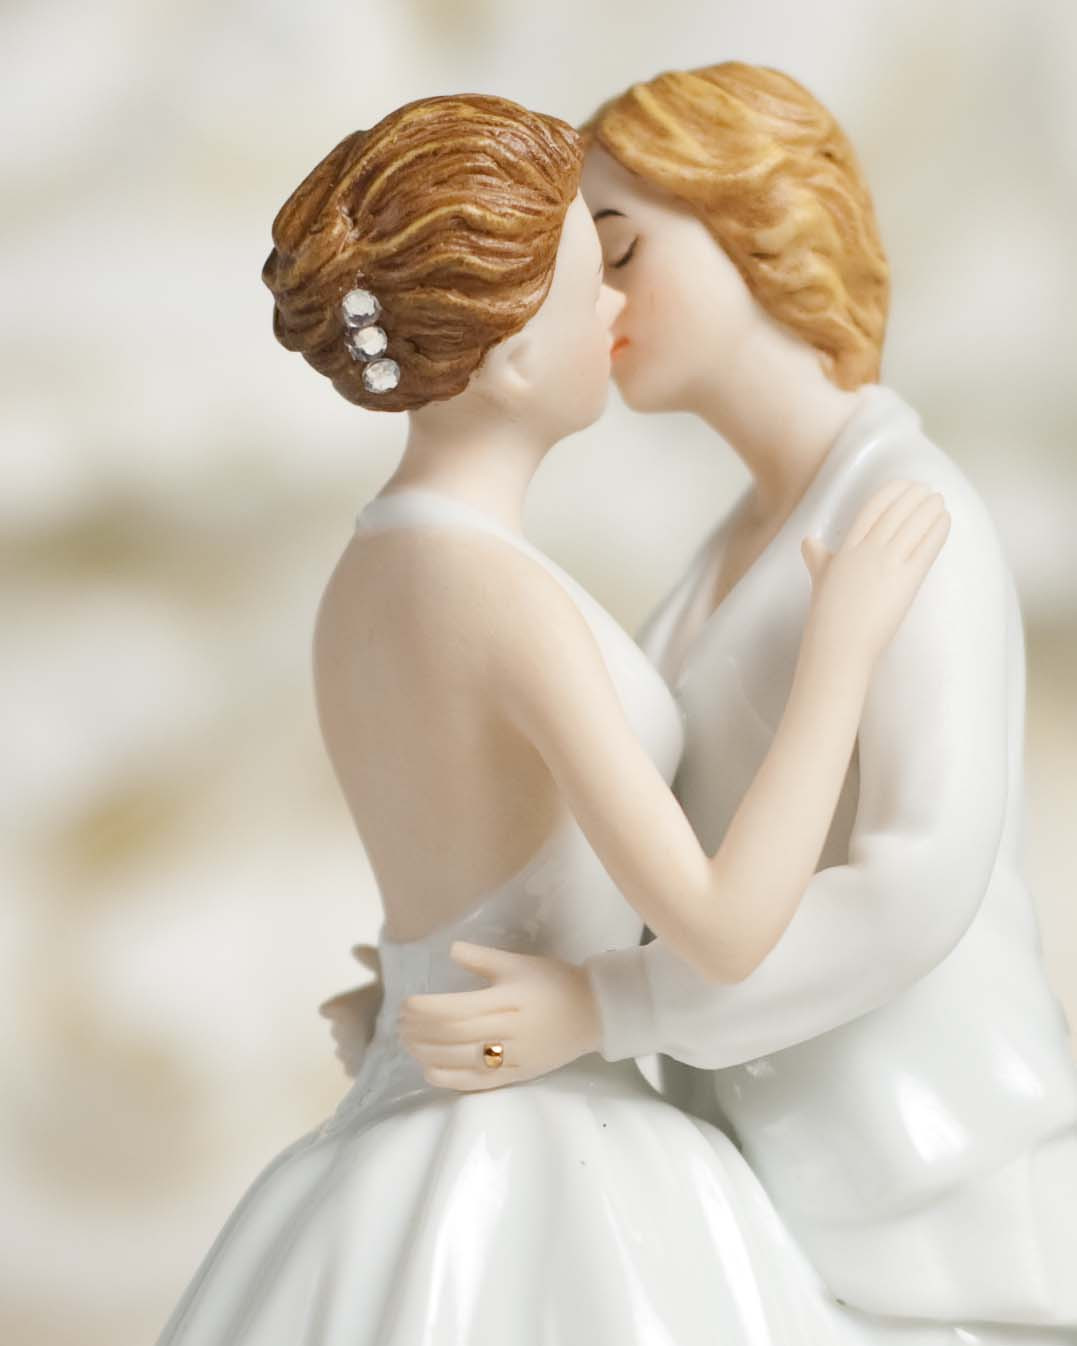 Lesbian Wedding Cake Toppers
 "Romance" Gay Lesbian Wedding Cake Topper